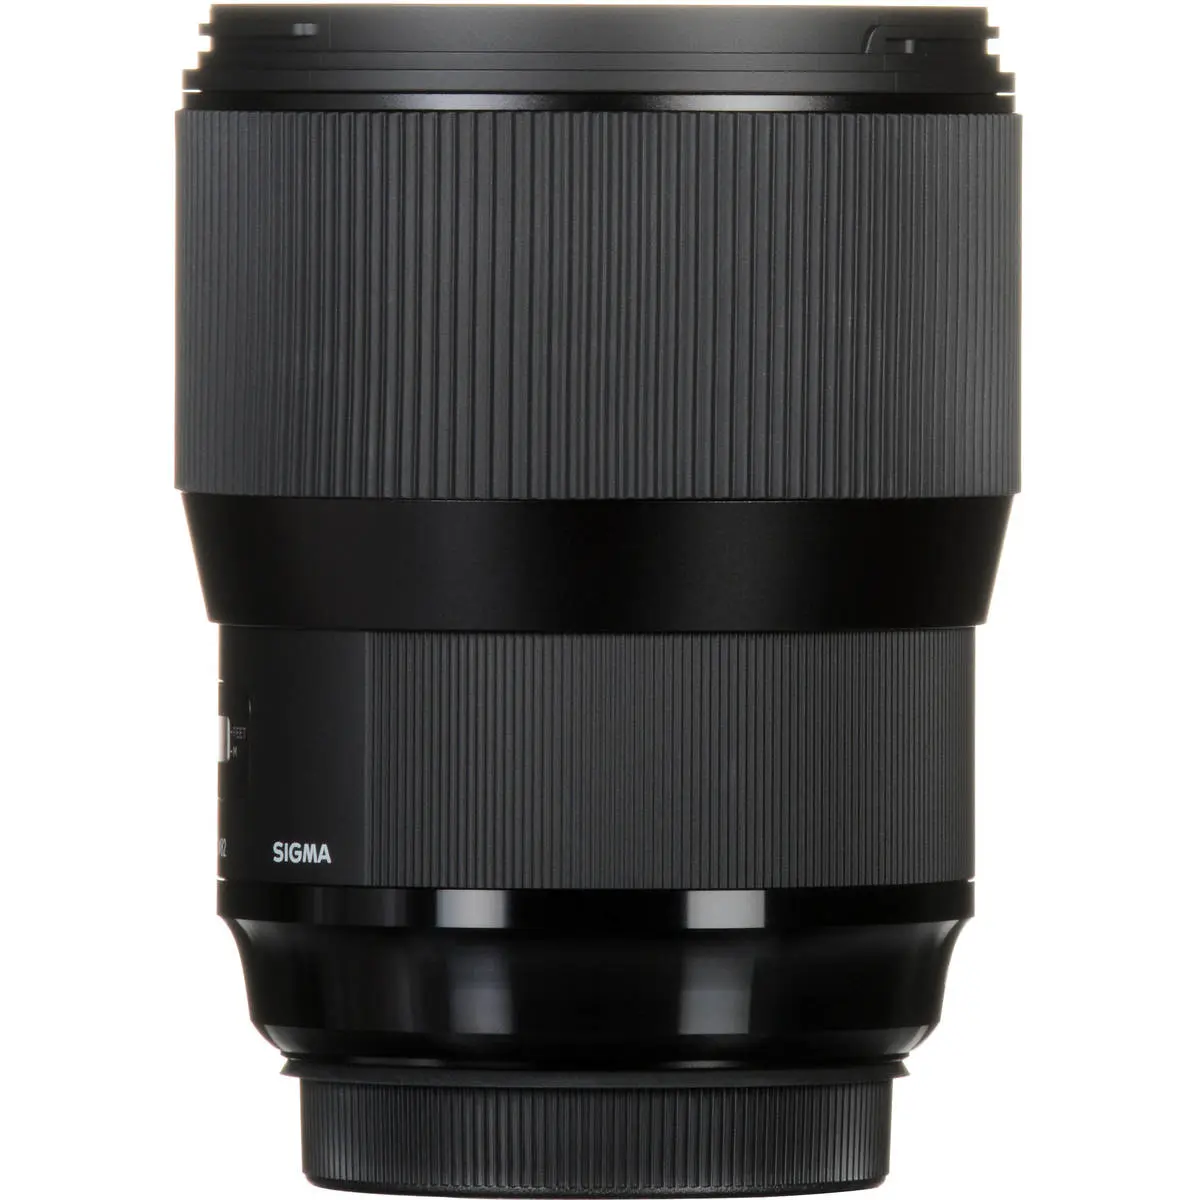 2. Sigma 135mm F1.8 DG HSM | Art (Sony-E) Lens